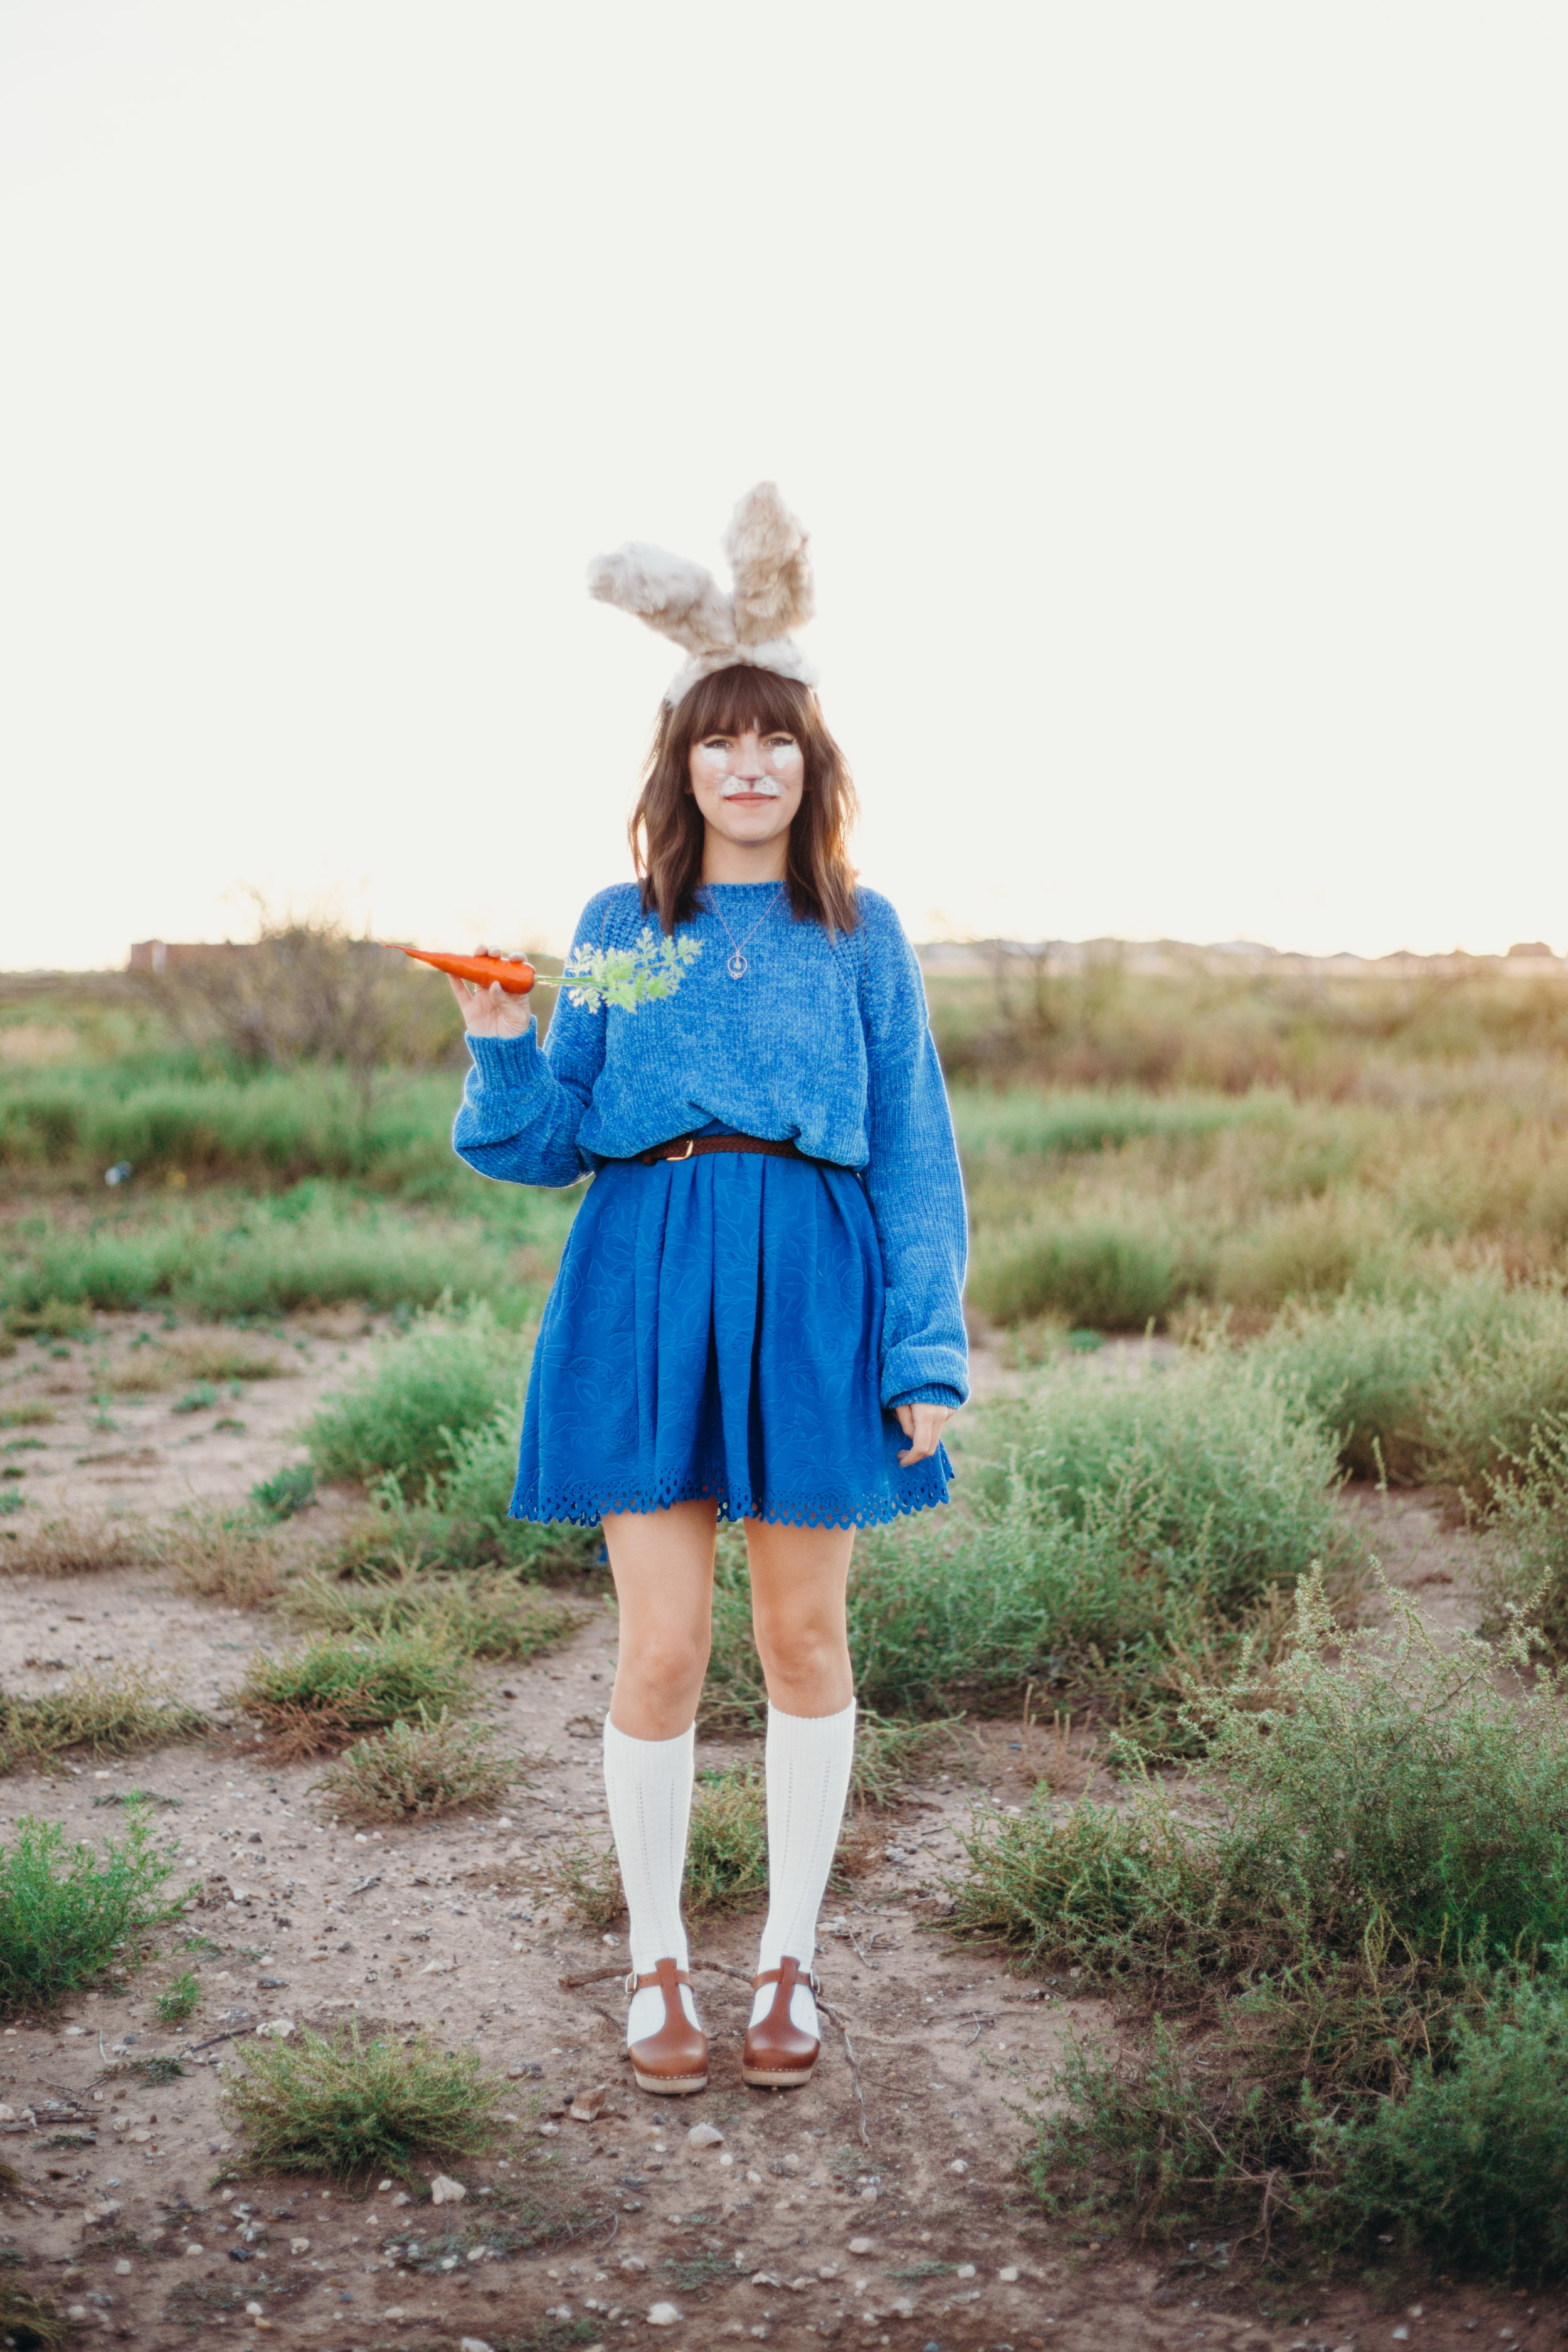 Peter Rabbit Halloween Costume — Stacie Stine pic